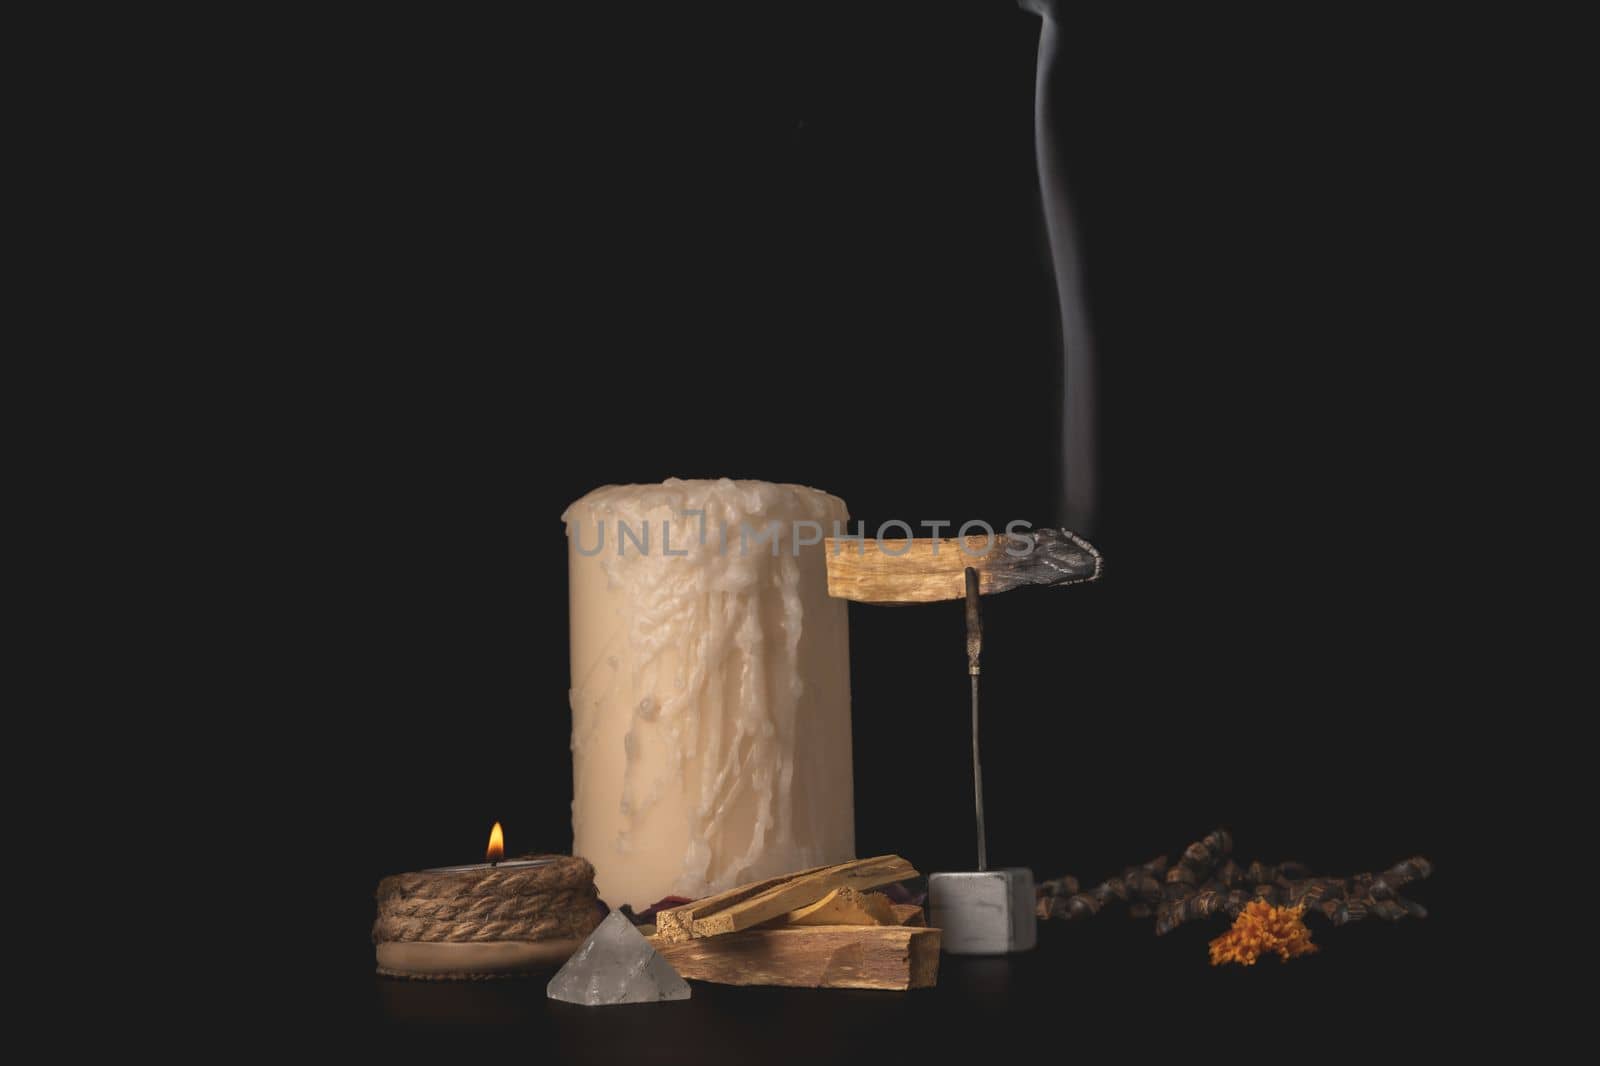 zen image of smoking palo santo,, holy stick with candles and japa-mala on black background